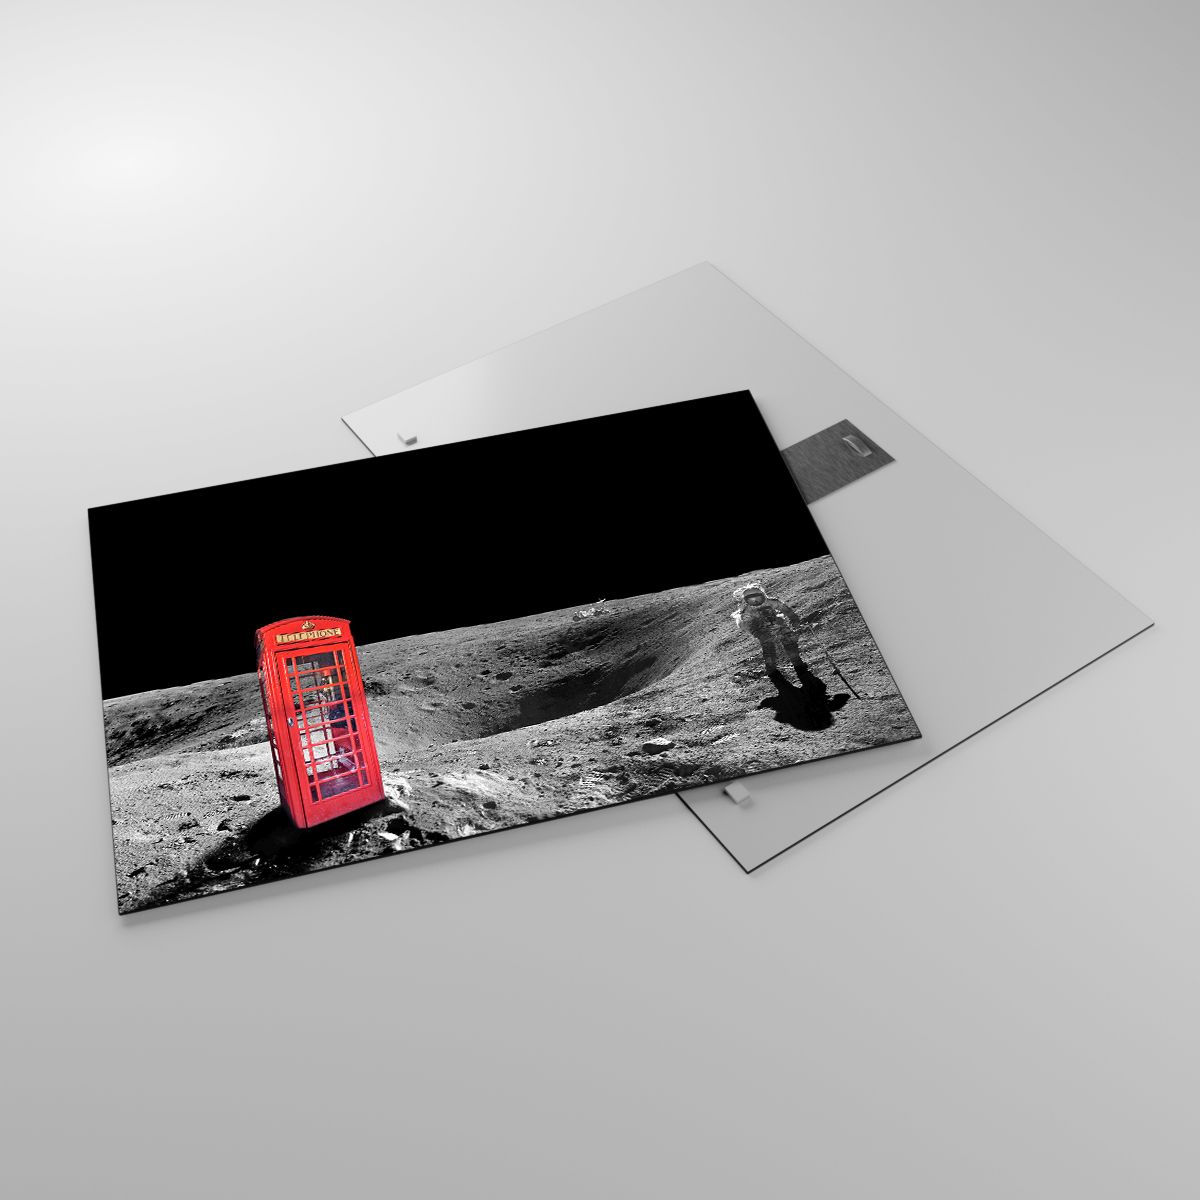 Glasbild Abstraktion, Glasbild Mond, Glasbild Astronaut, Glasbild Telefonzelle, Glasbild Krater